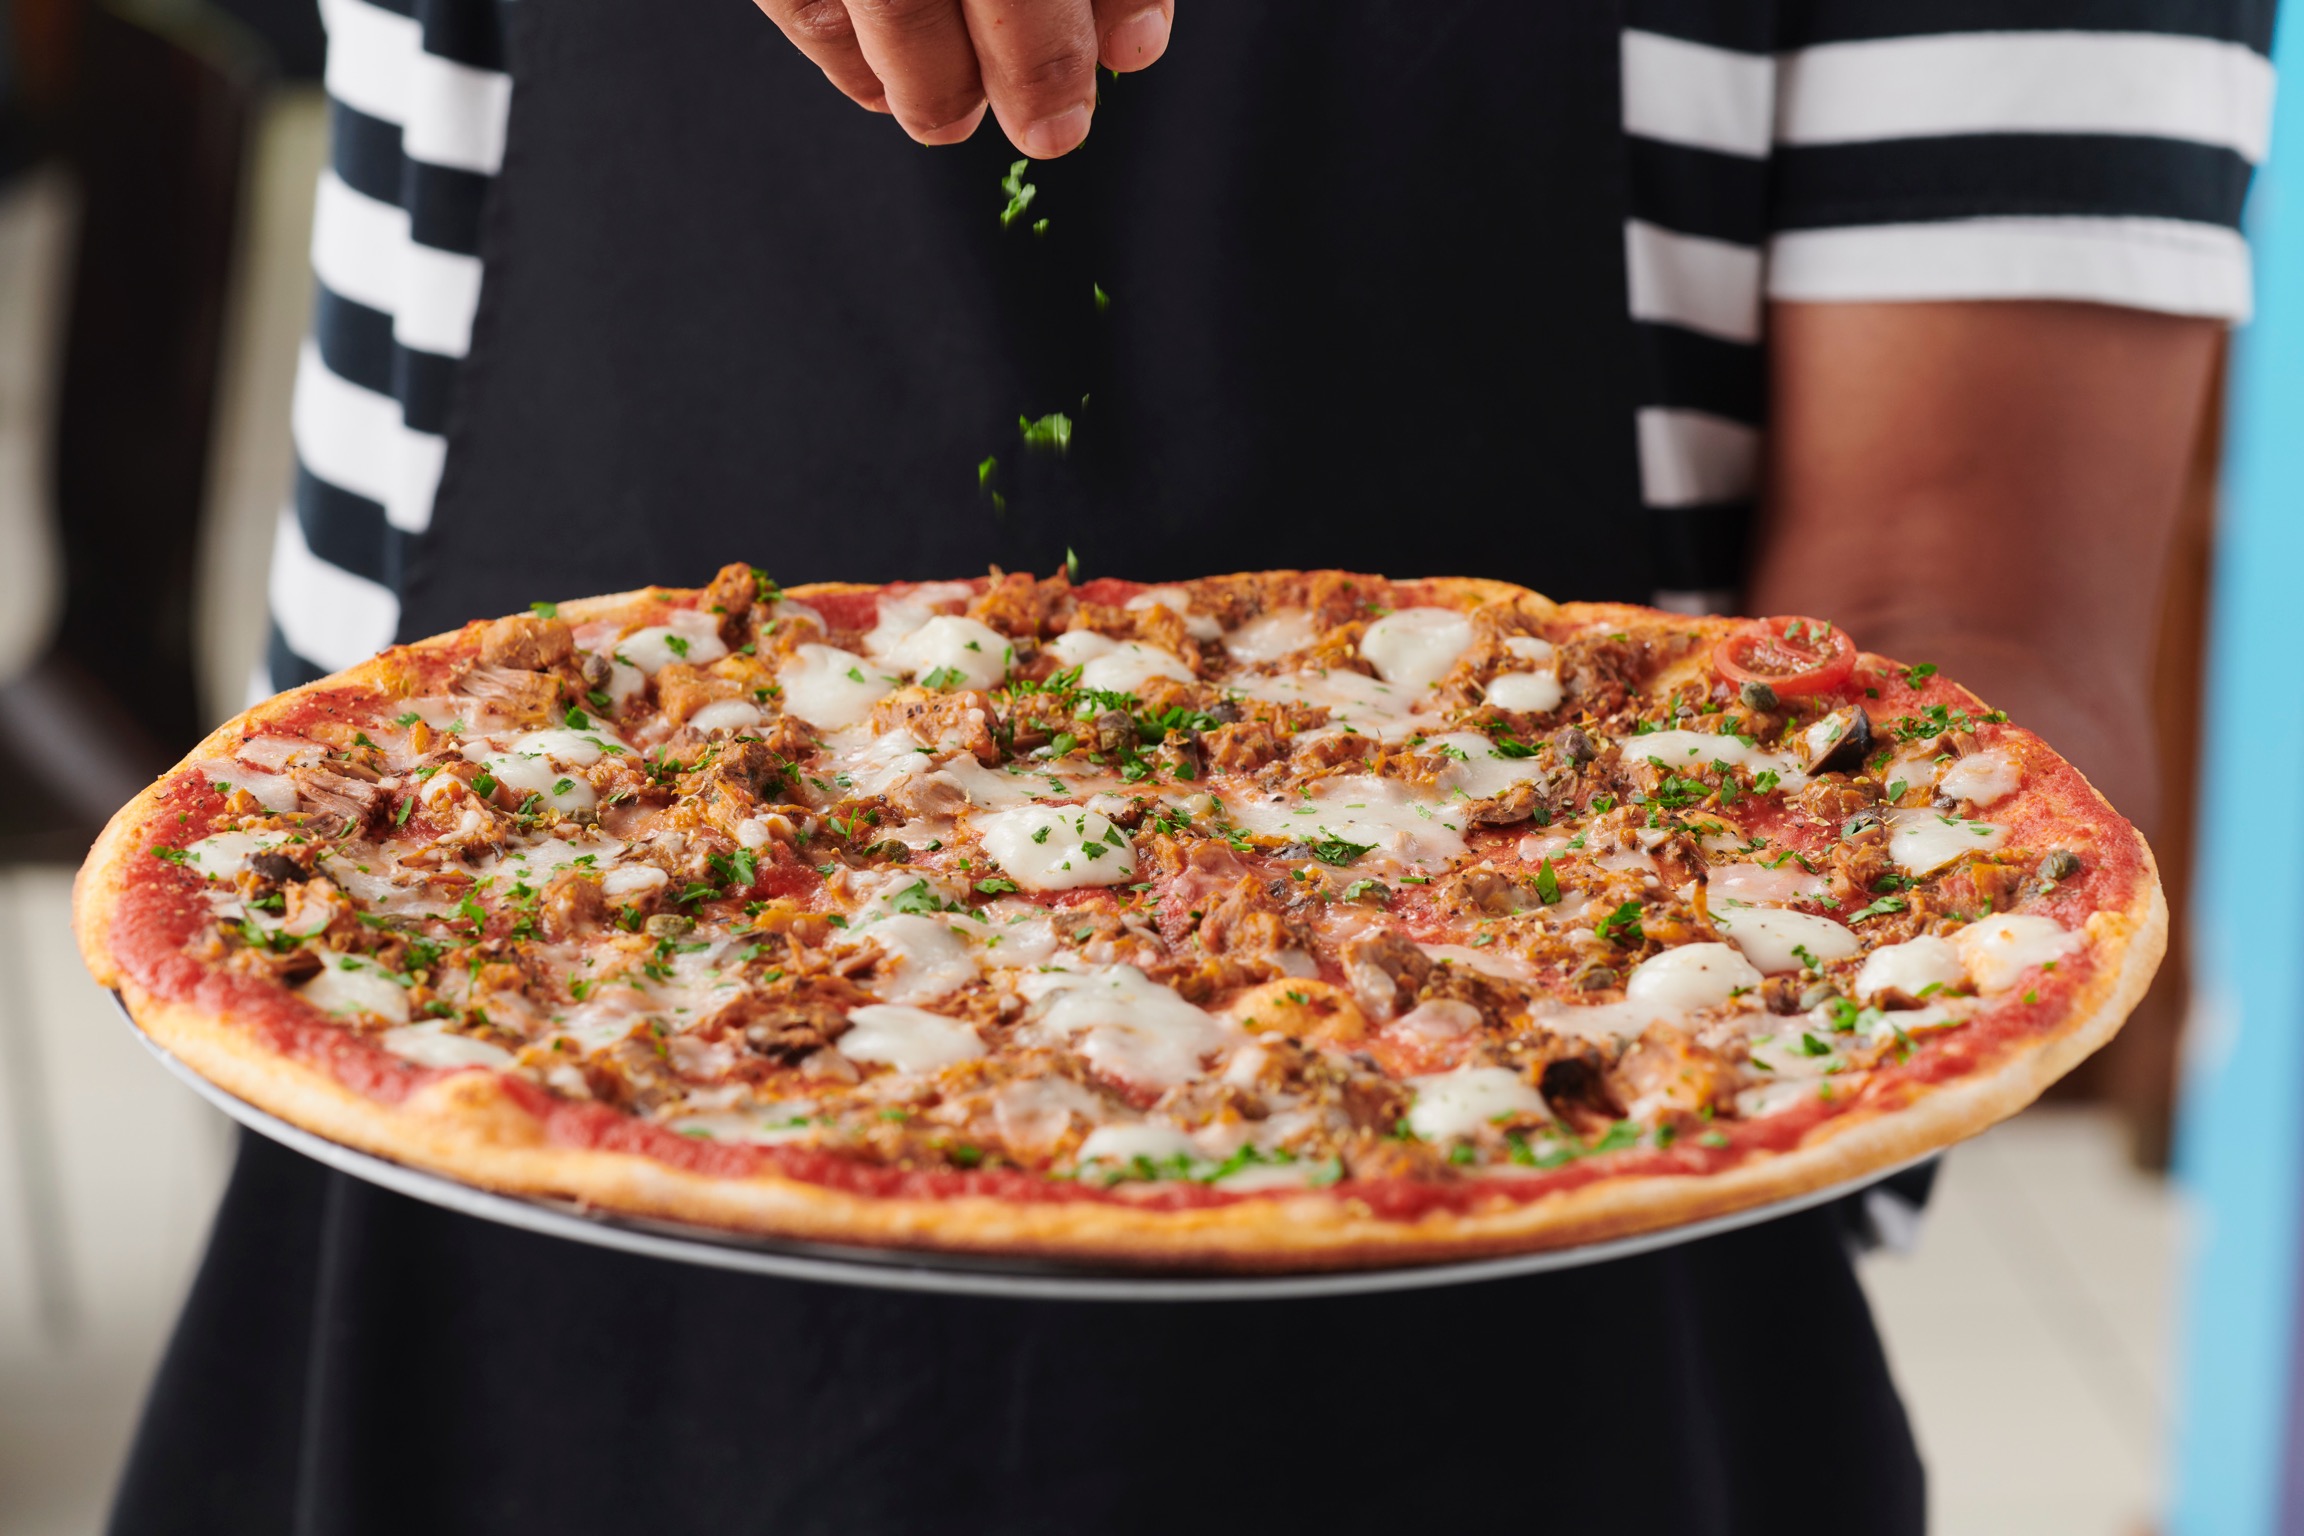 Pizza Express Launches Vegan Pizza in Waitrose - Veganuary